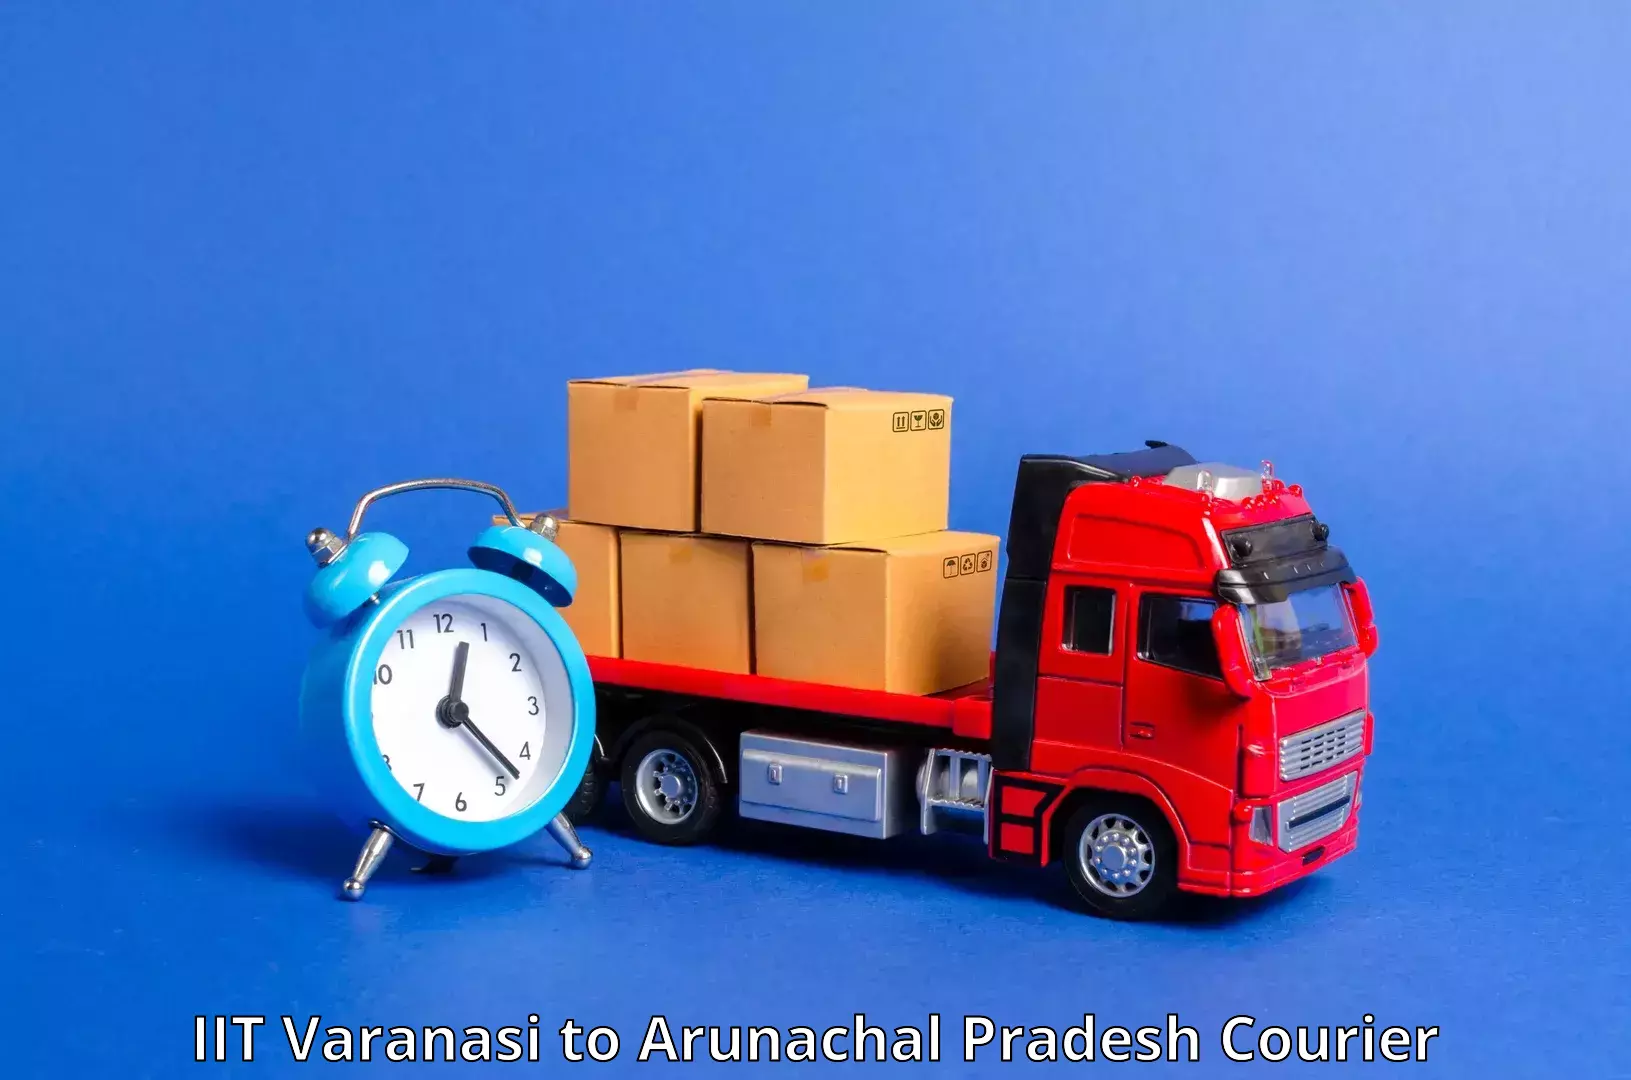 Speedy delivery service in IIT Varanasi to Lower Subansiri